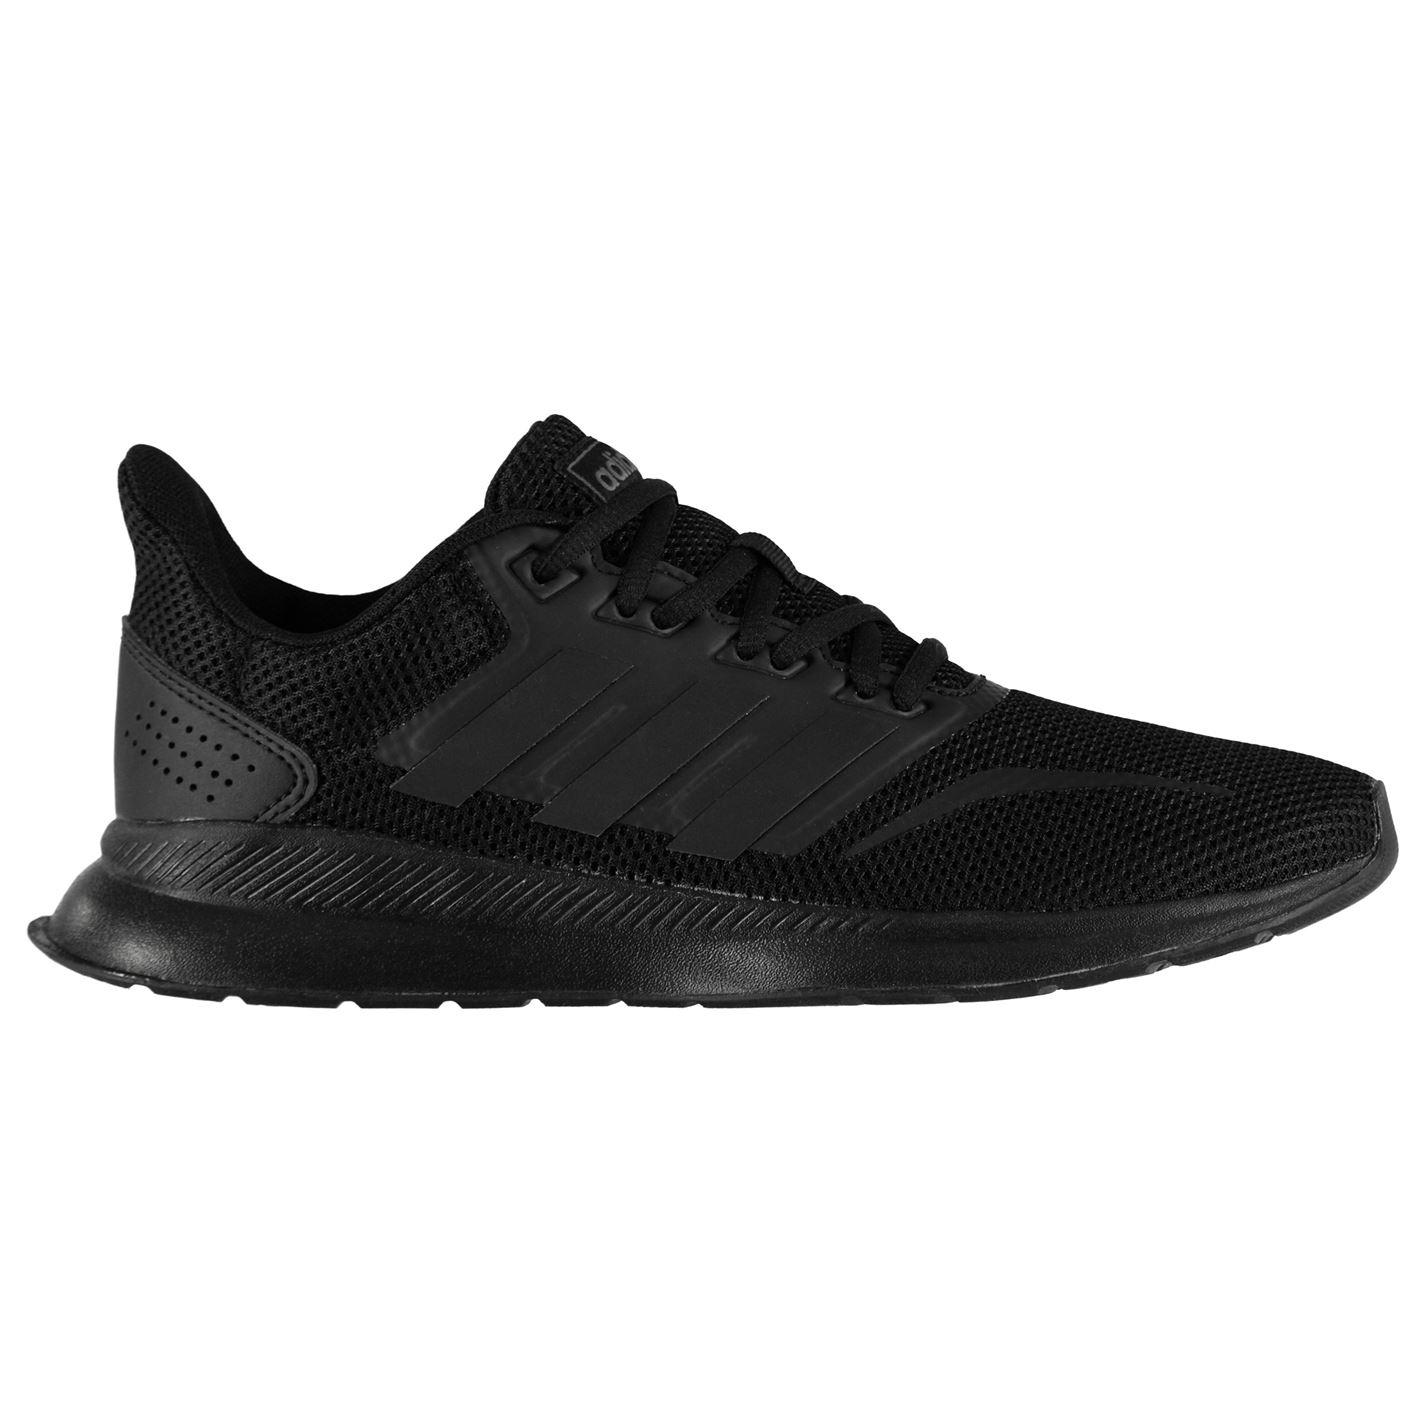 cool black adidas shoes